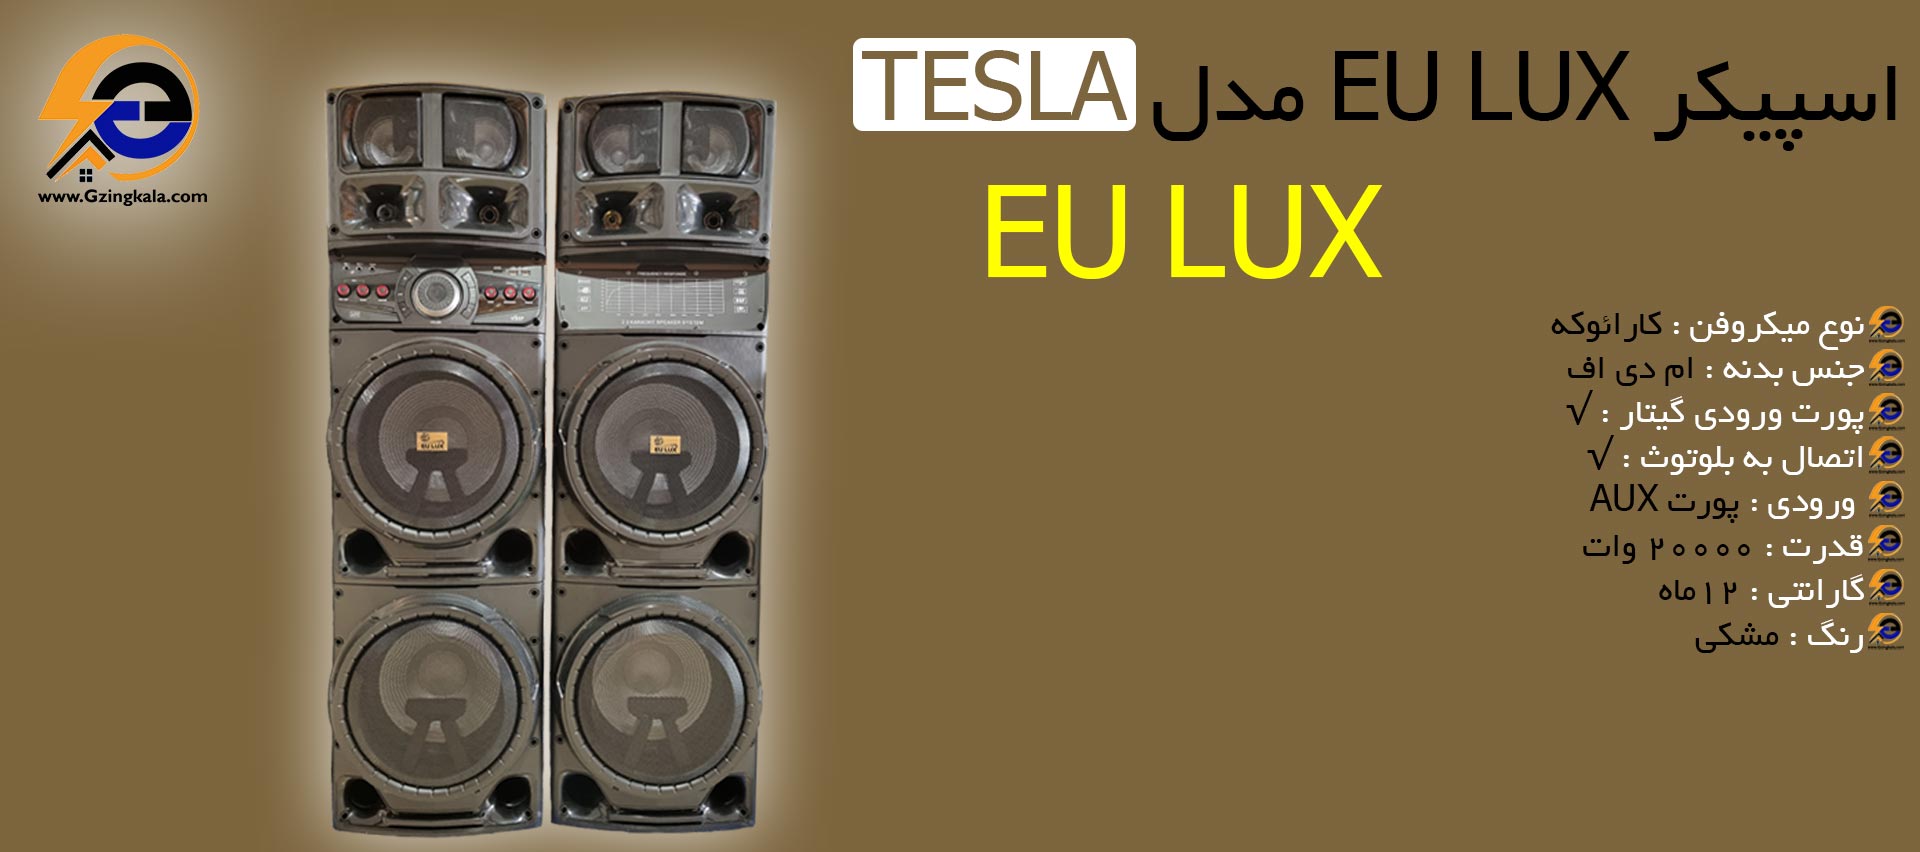 اسپیکر EU LUX مدل TESLA